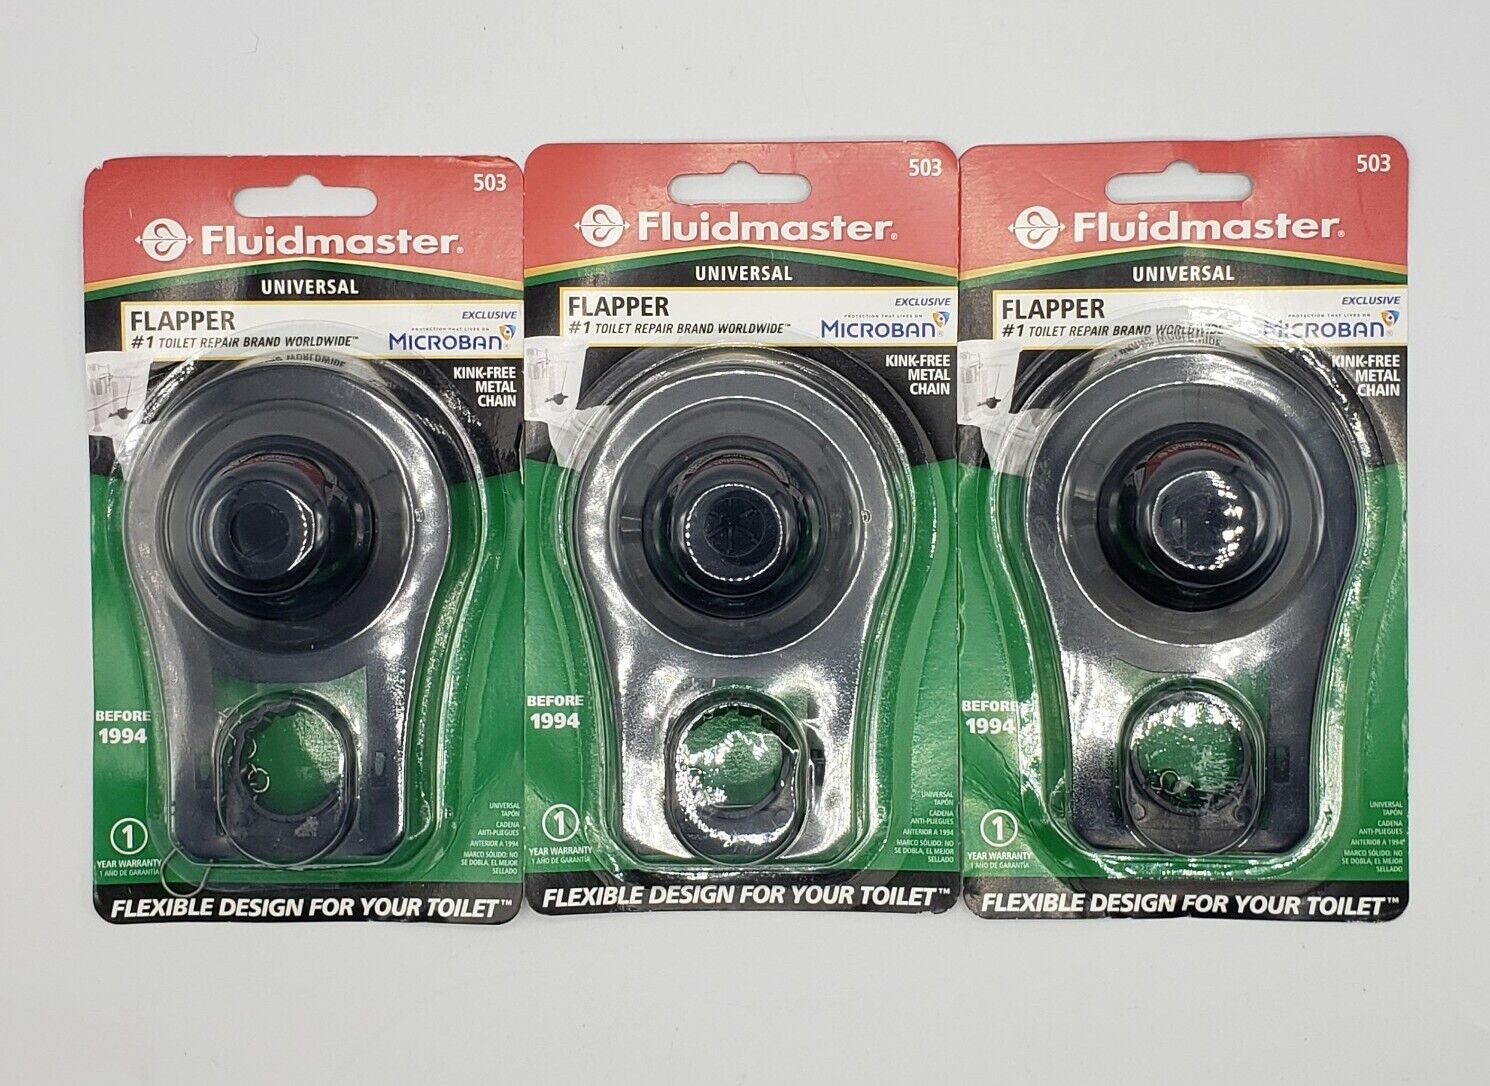 Fluidmaster Toilet Flapper 503 Black Universal For Toilets Prior to 1994 -3 pack Fluidmaster Fluidmaster